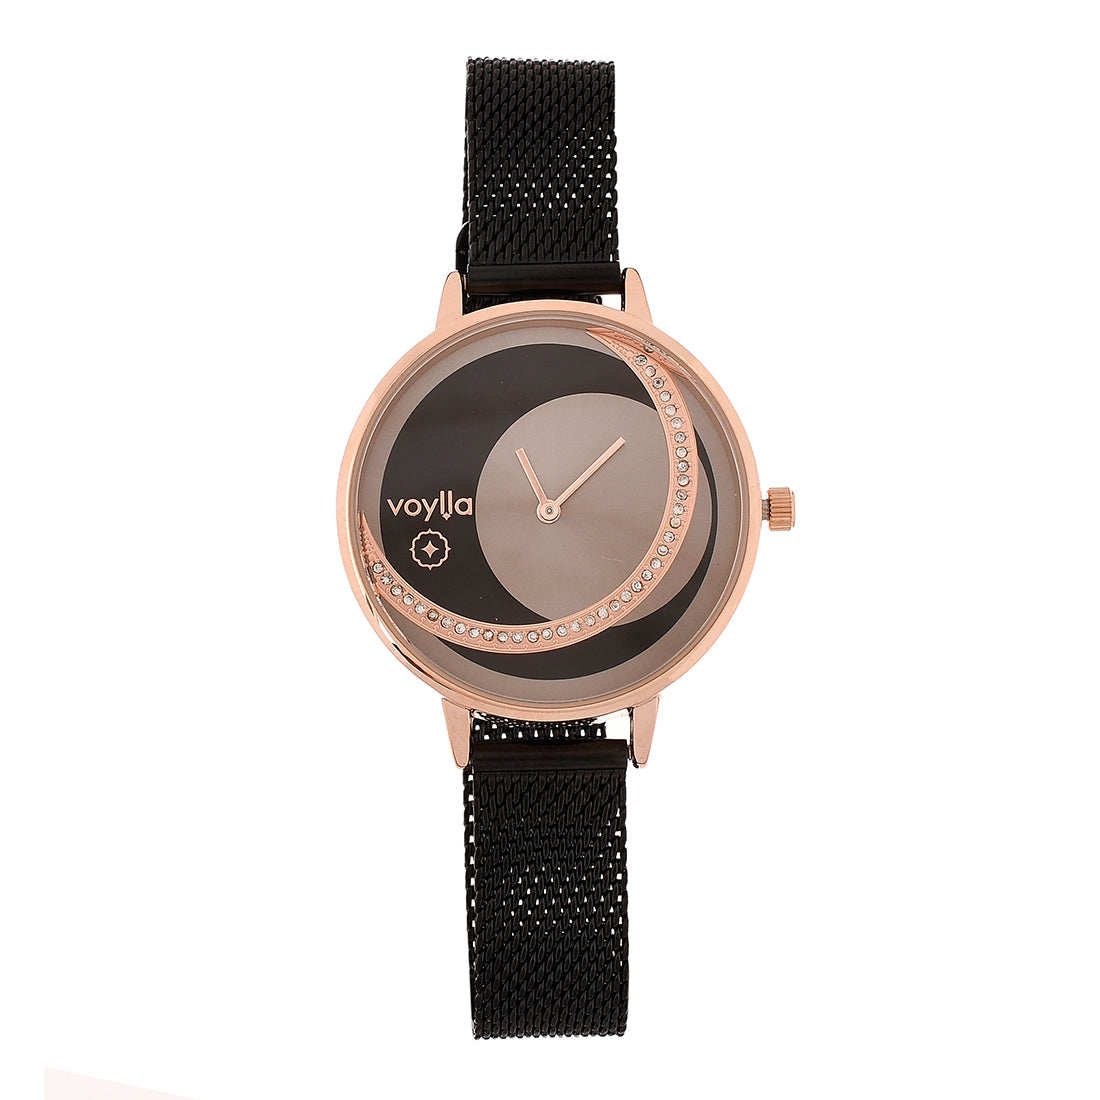 Voylla Black And Grey Dial Studded Watch - Voylla